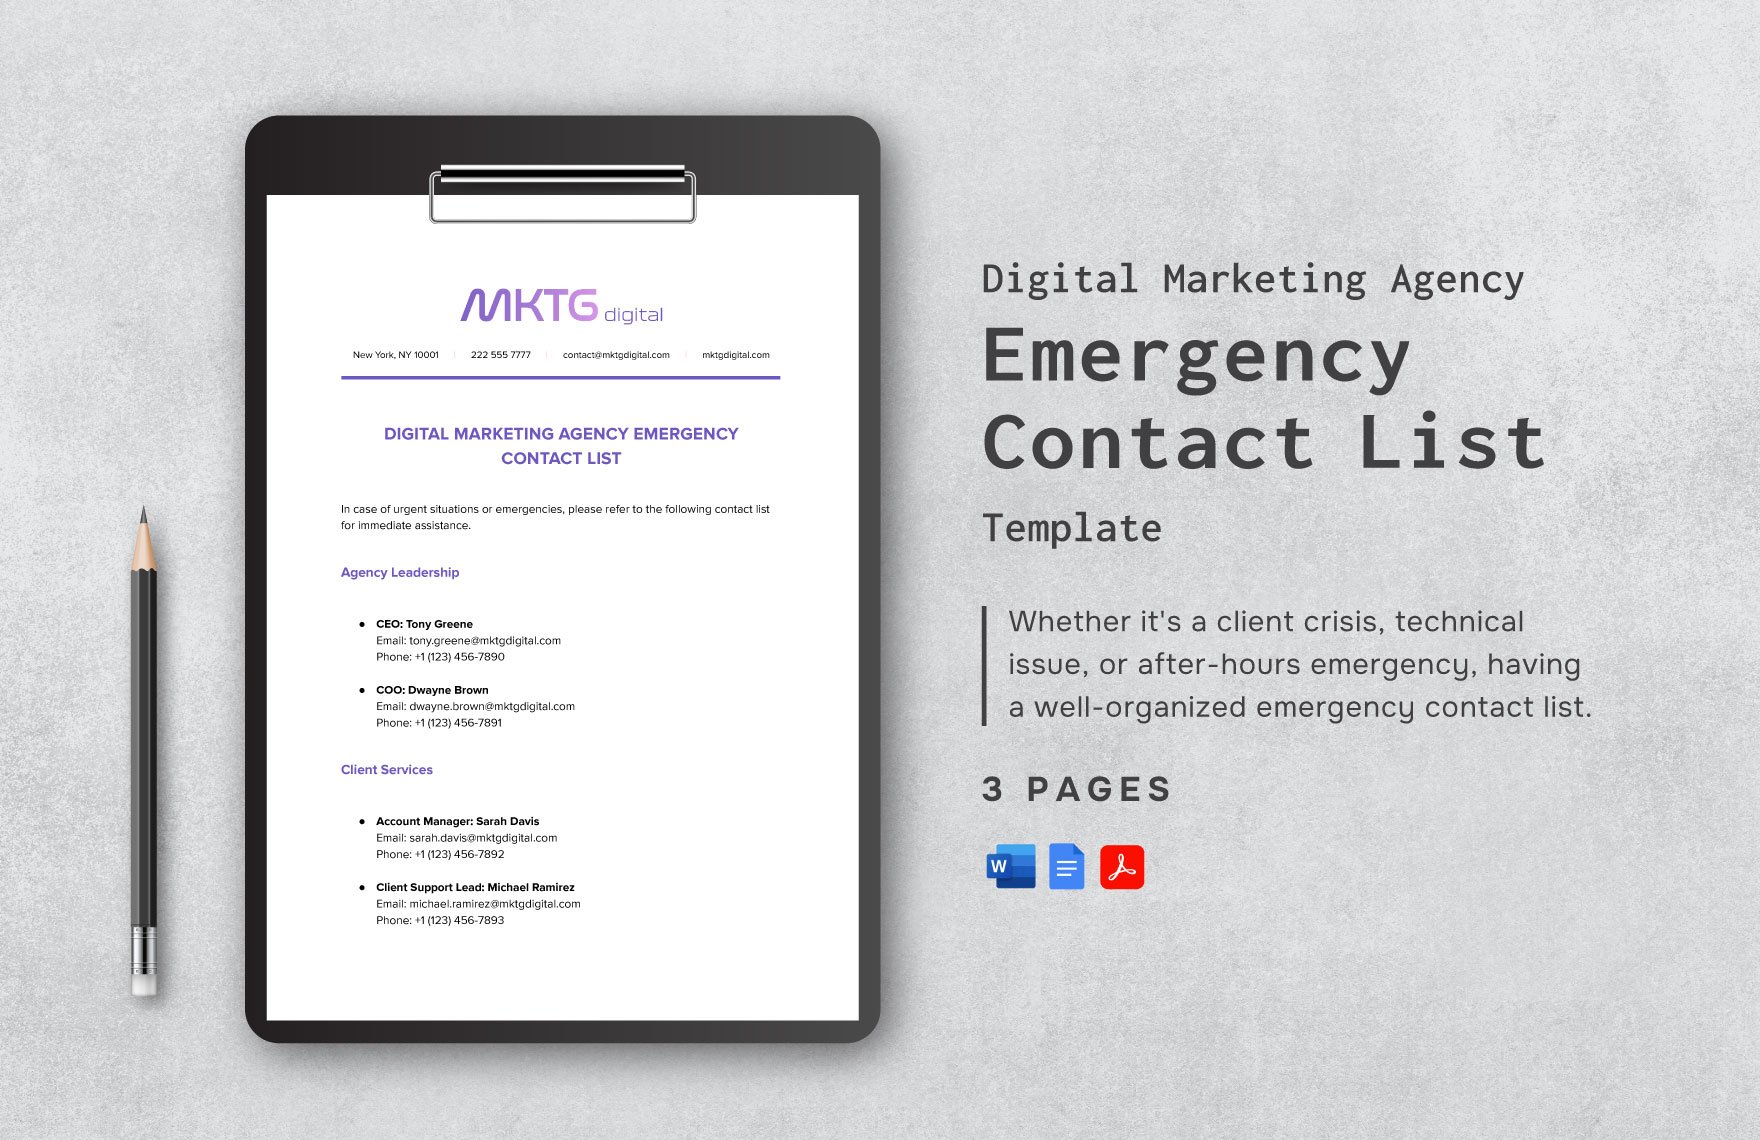 Digital Marketing Agency Emergency Contact List Template